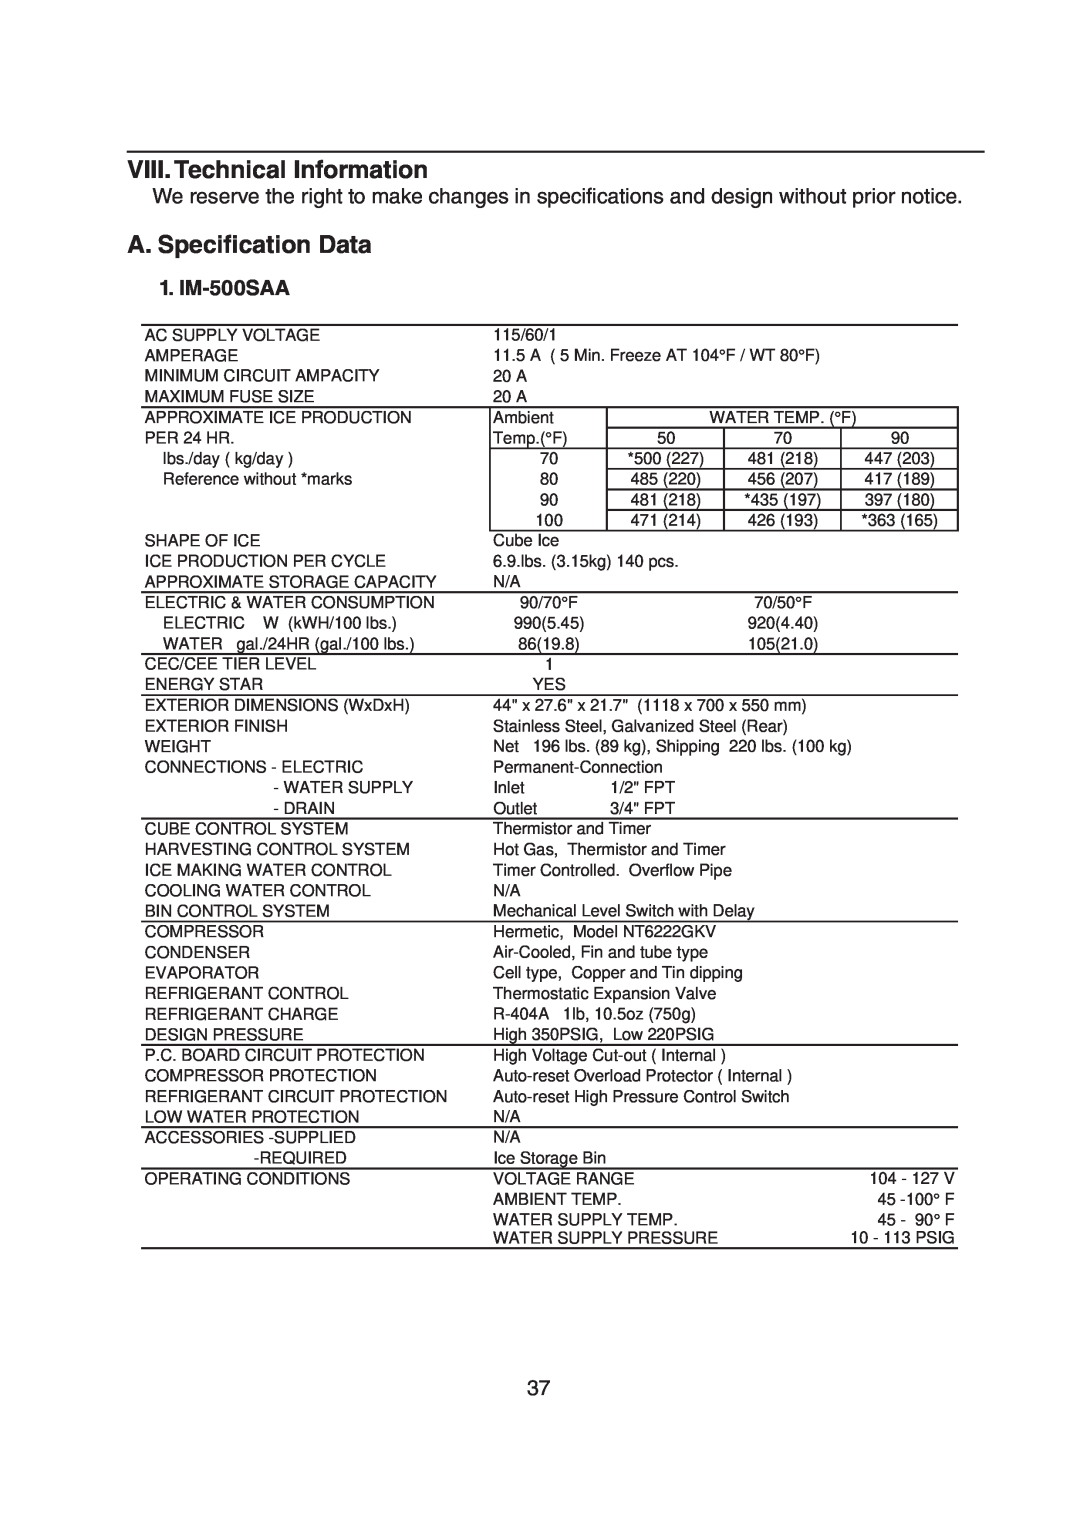 Hoshizaki M029-897 service manual VIII. Technical Information, A. Specification Data, IM-500SAA 